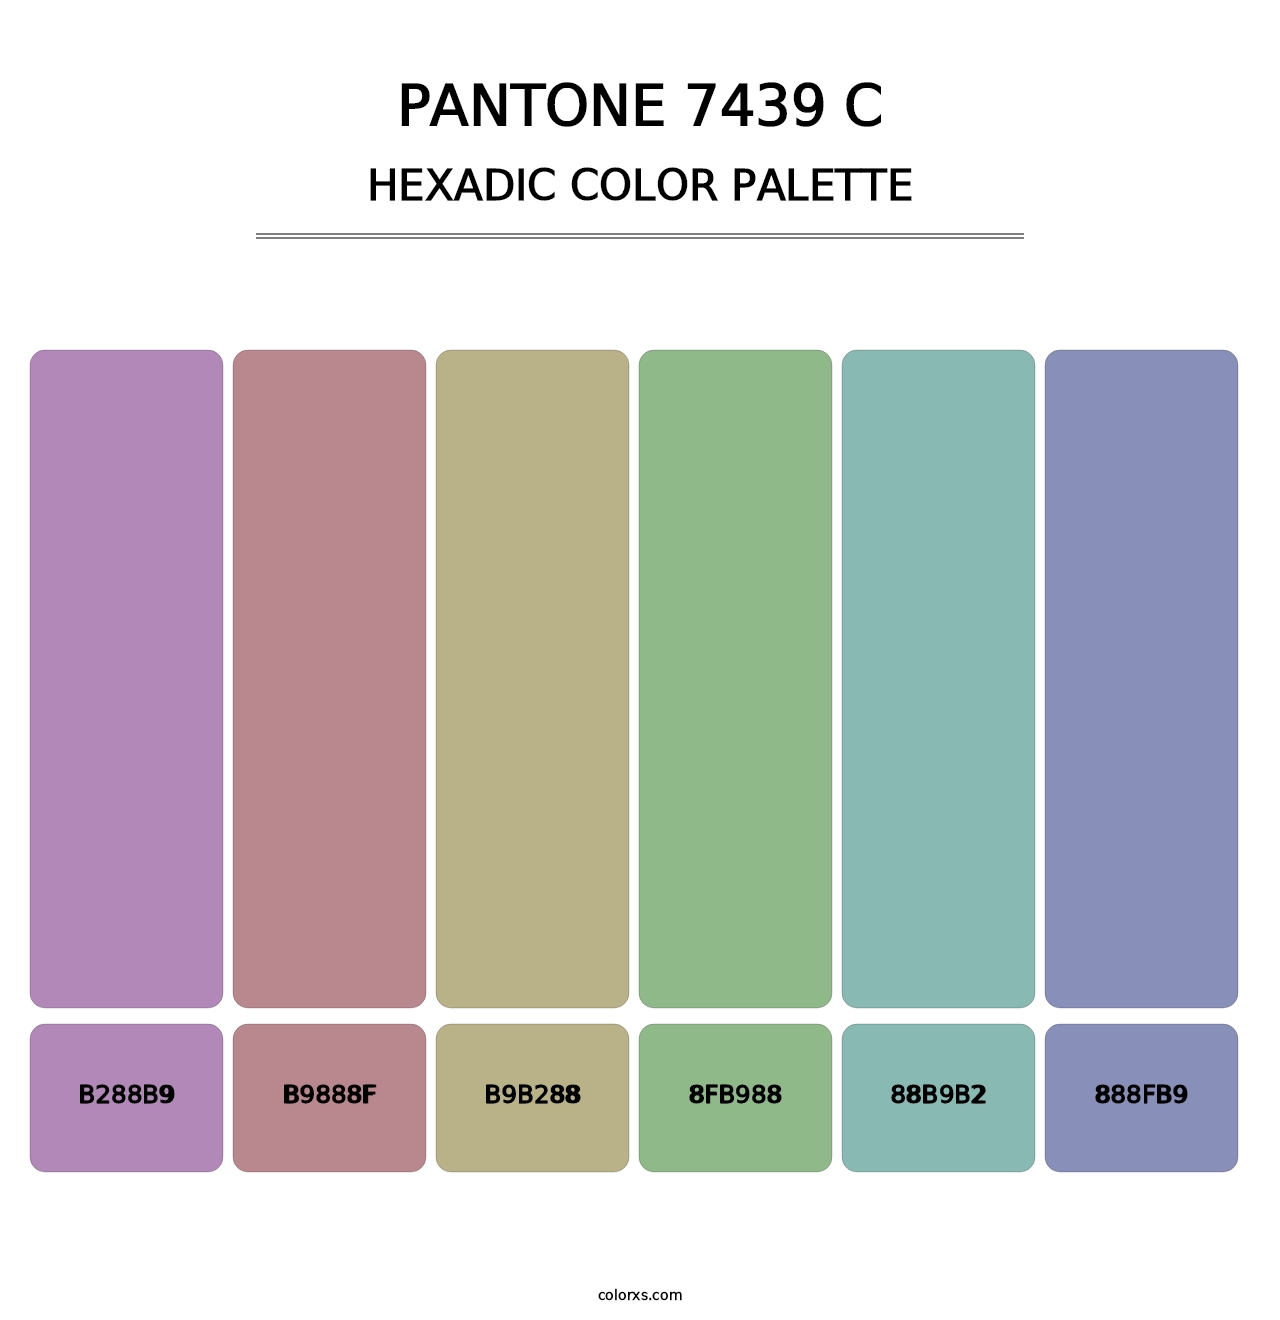 PANTONE 7439 C - Hexadic Color Palette